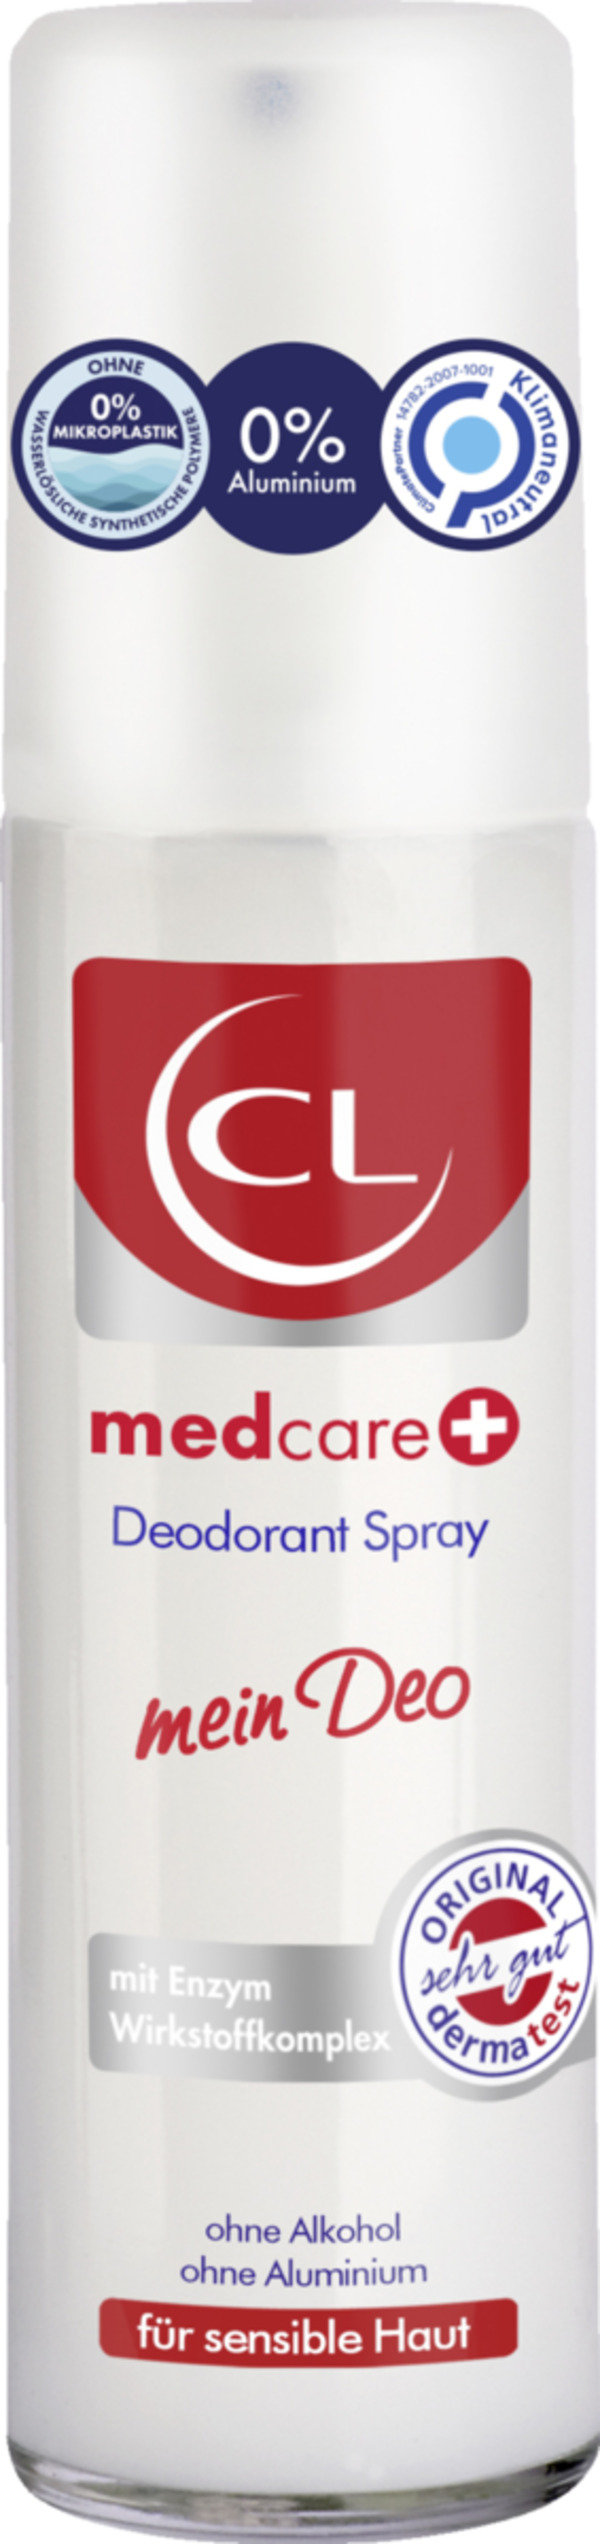 Bild 1 von CL Deo med care + Deodorant Spray